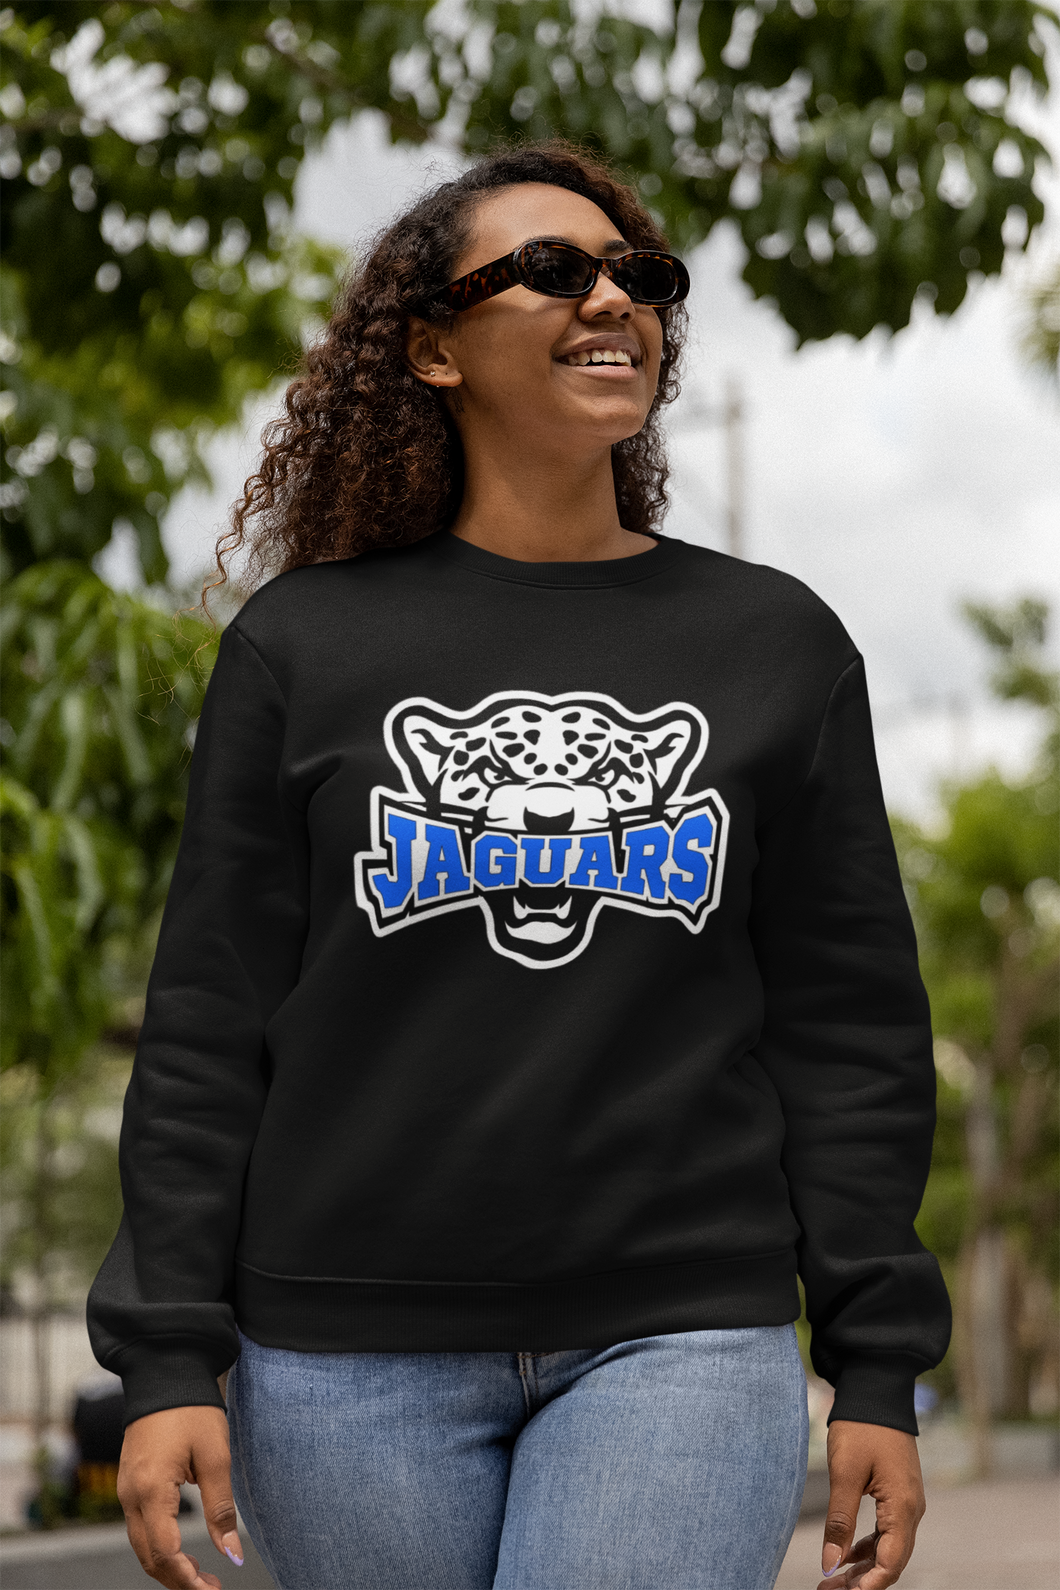 Jaguars Sports Black Sweatshirt With Glitter (Adult Sizes)